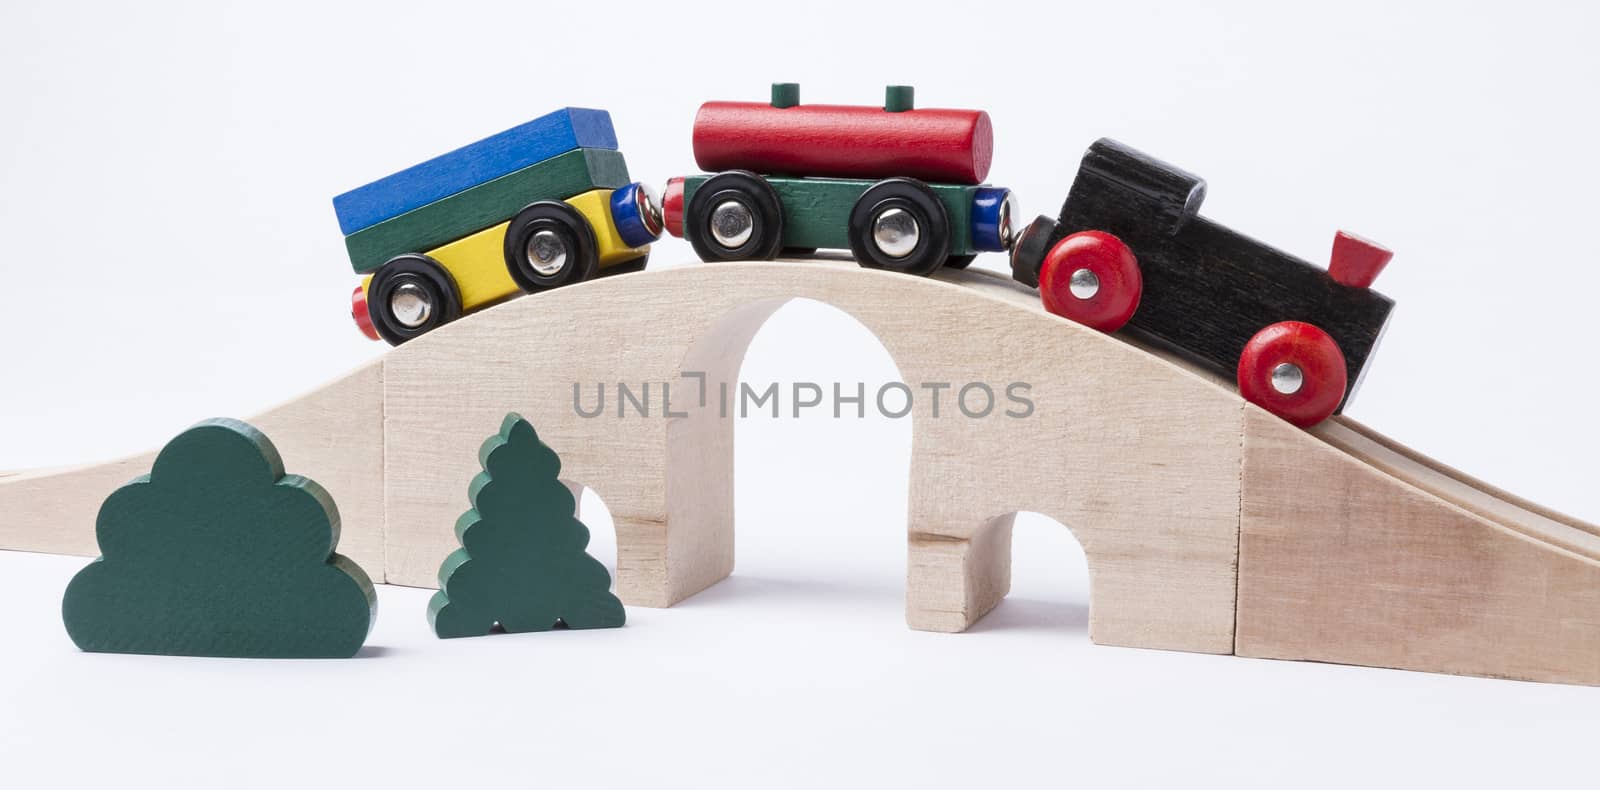 wooden toy train on bridge in grey background. horizontal image